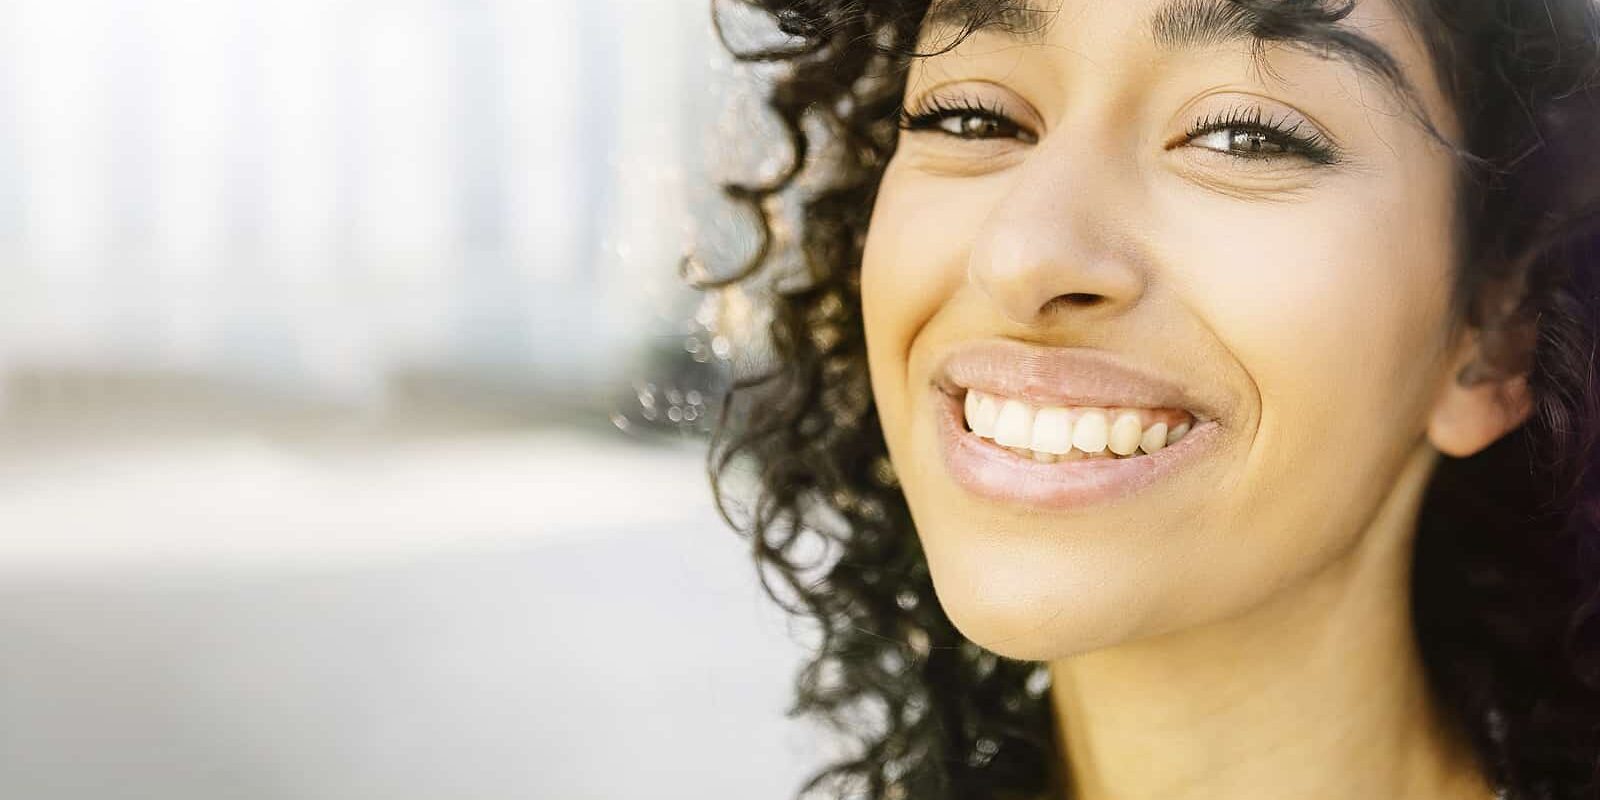 “How Can I Improve My Smile?” Teeth Whitening Dental Veneers